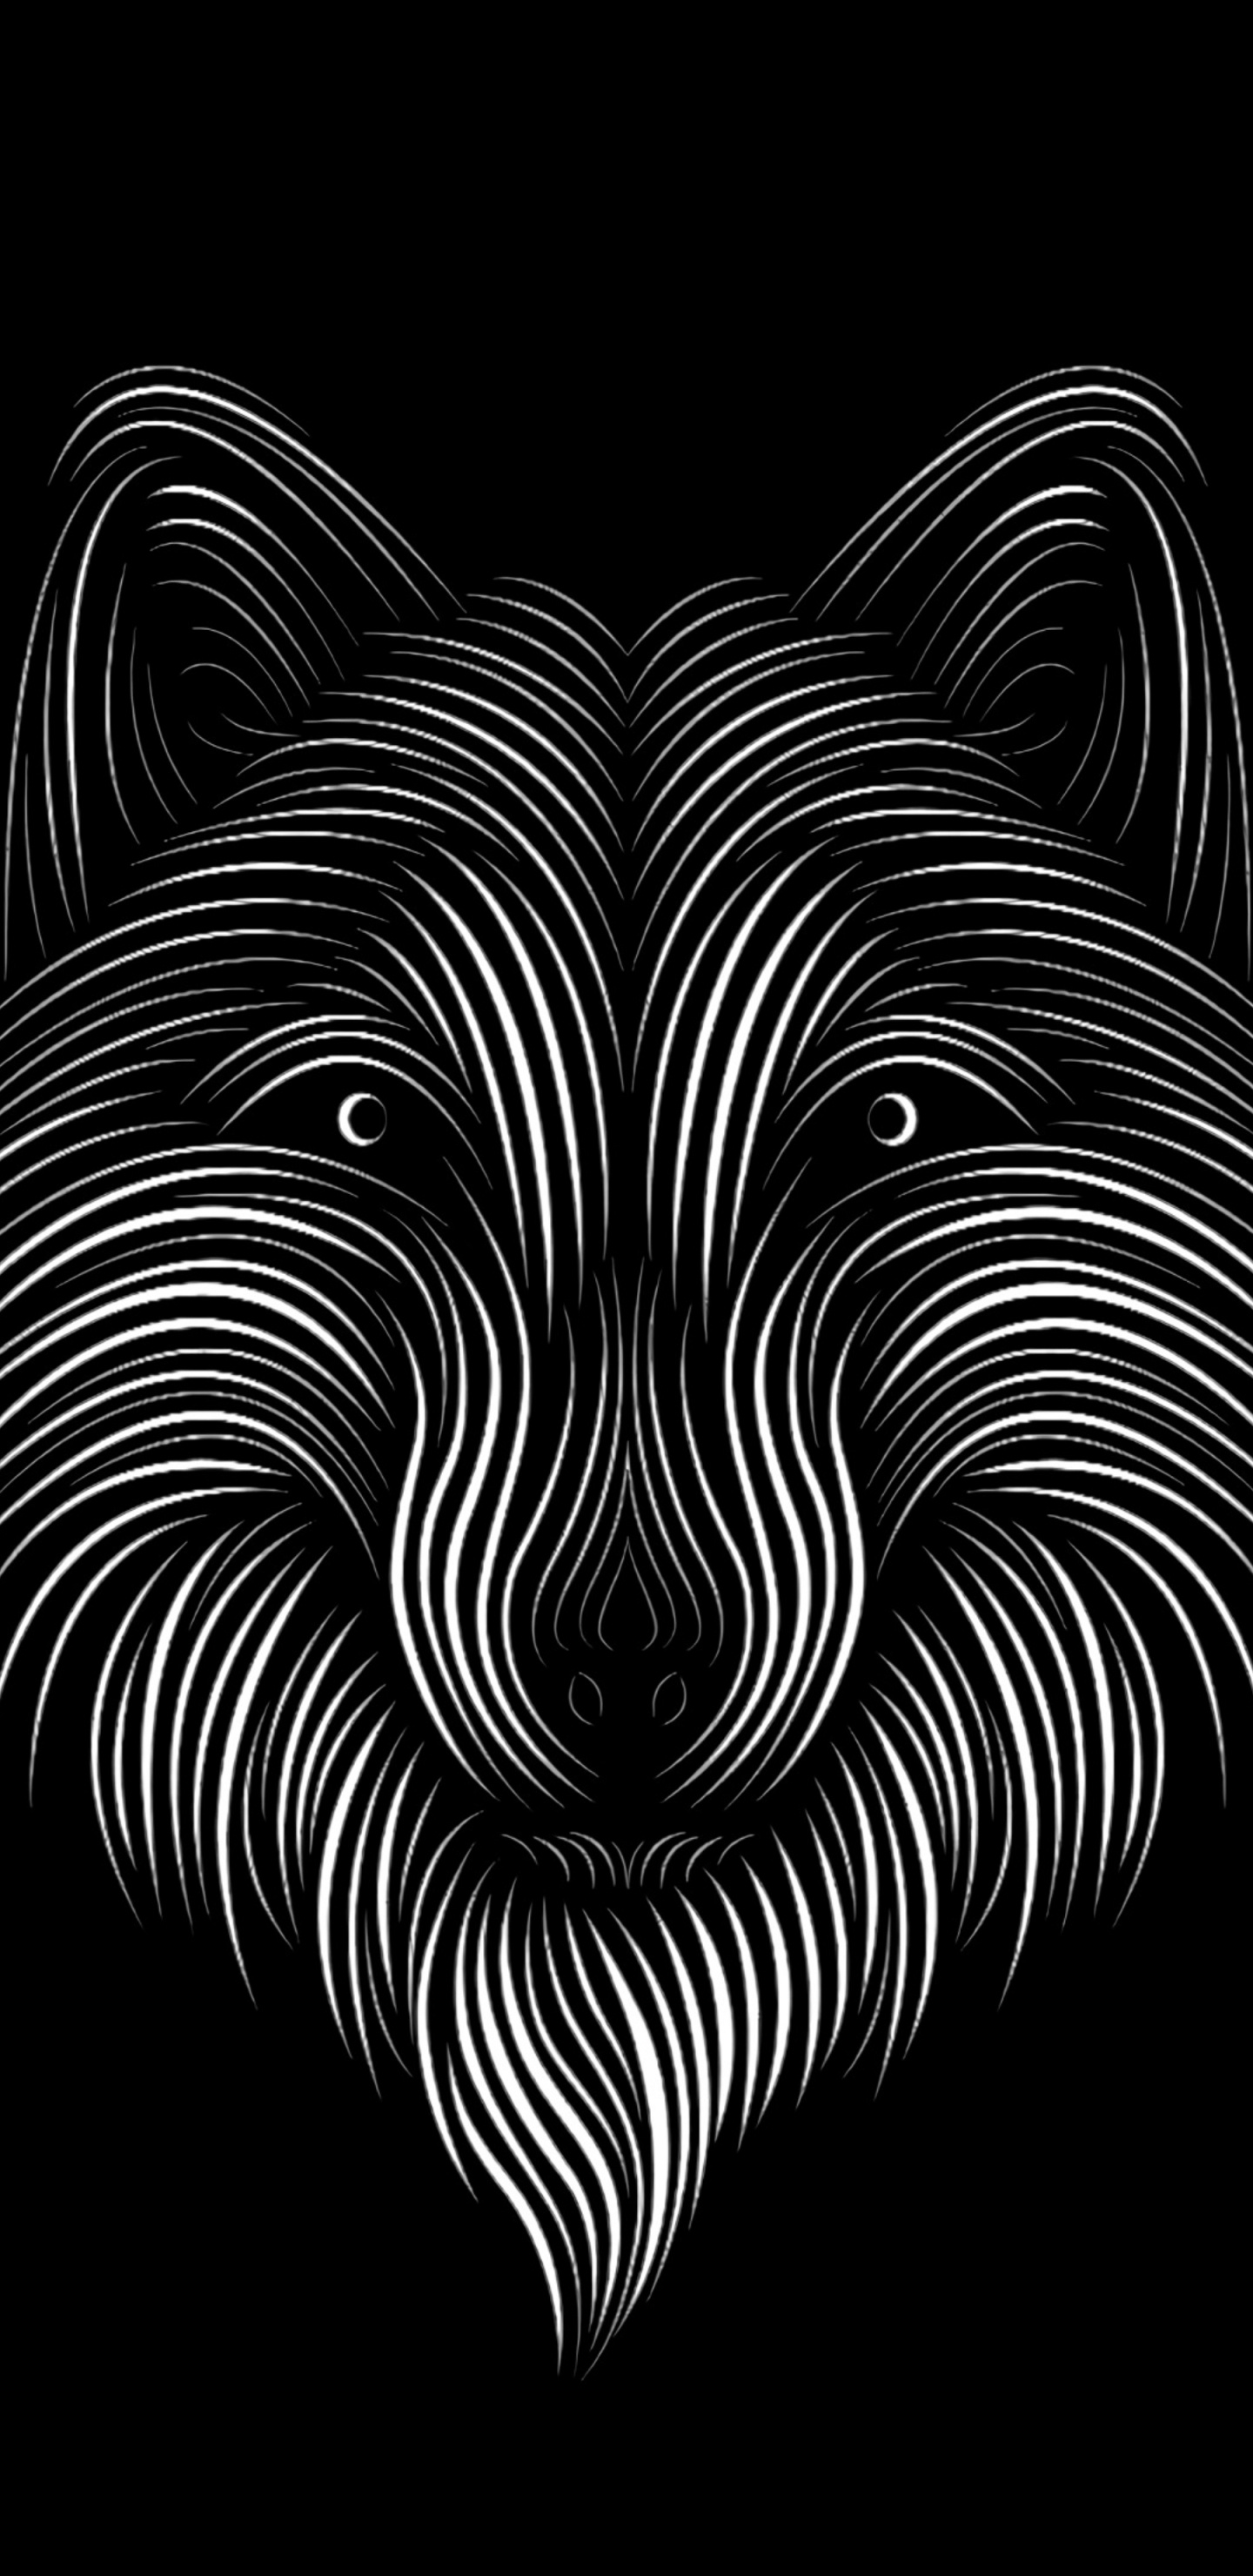 Black and White Zebra Illustration. Wallpaper in 1440x2960 Resolution